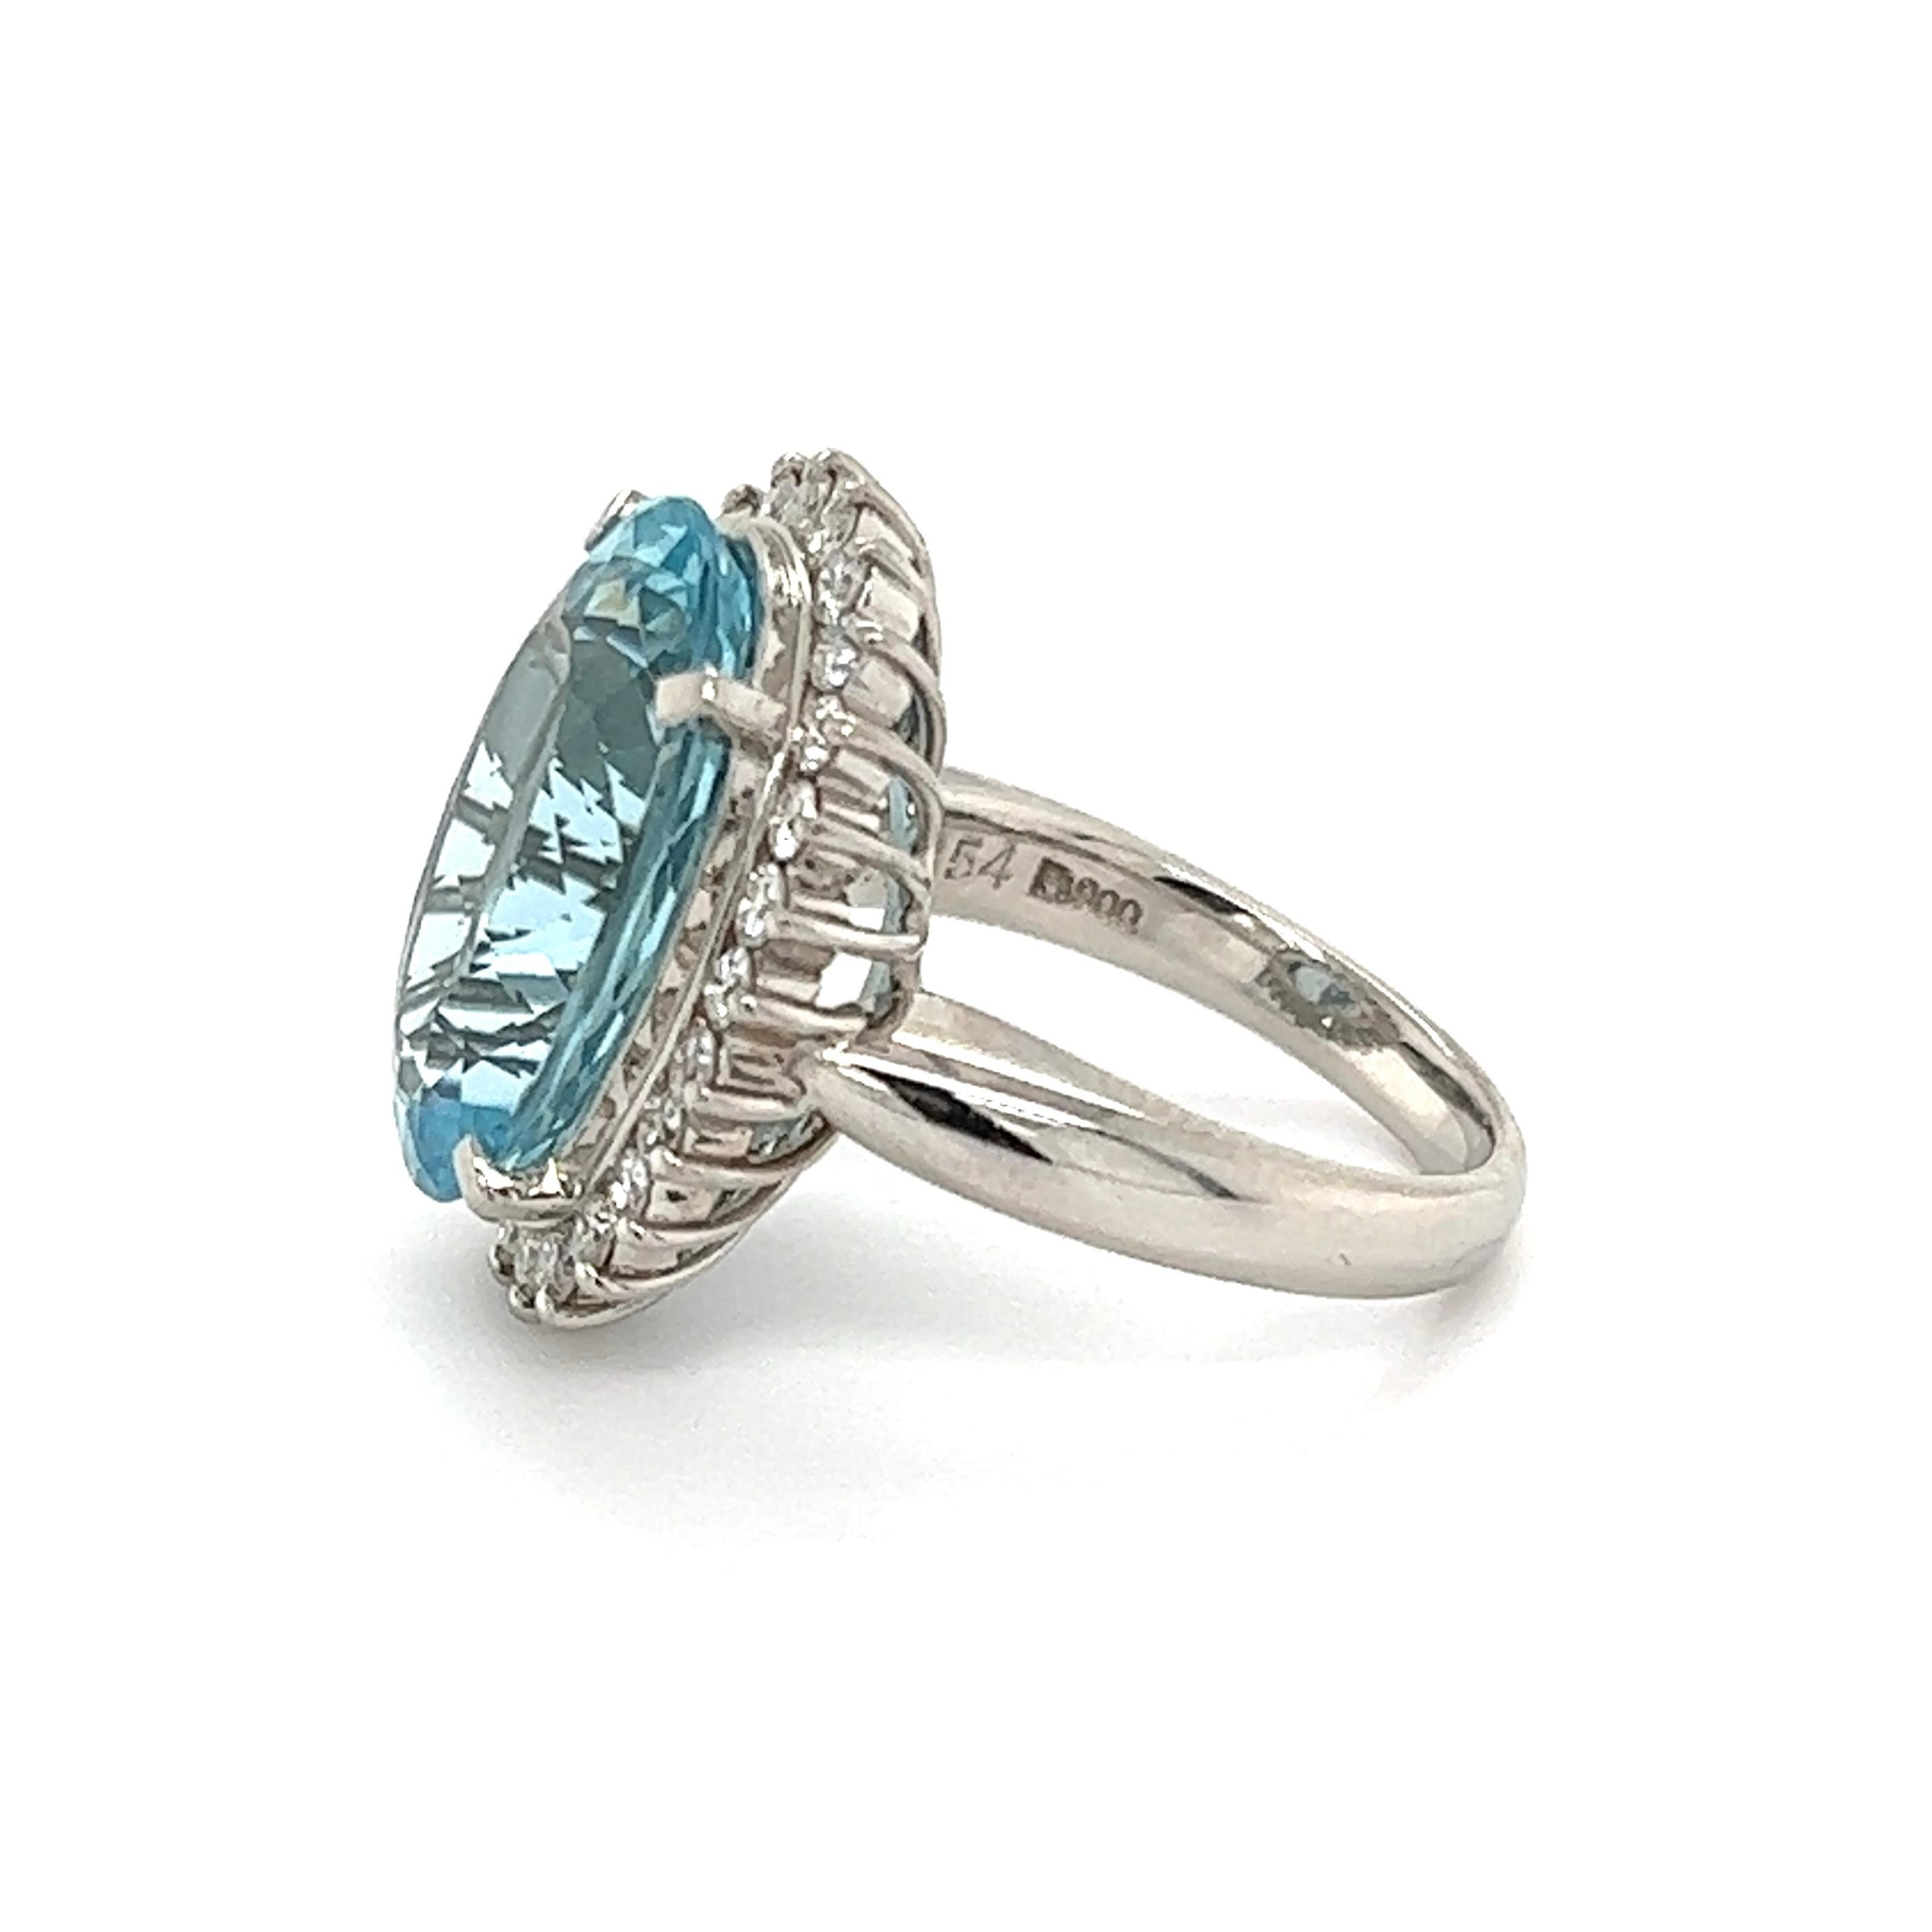 Mixed Cut 9.25 Carat Oval Aquamarine and Diamond Platinum Ring Estate Fine Jewelry For Sale